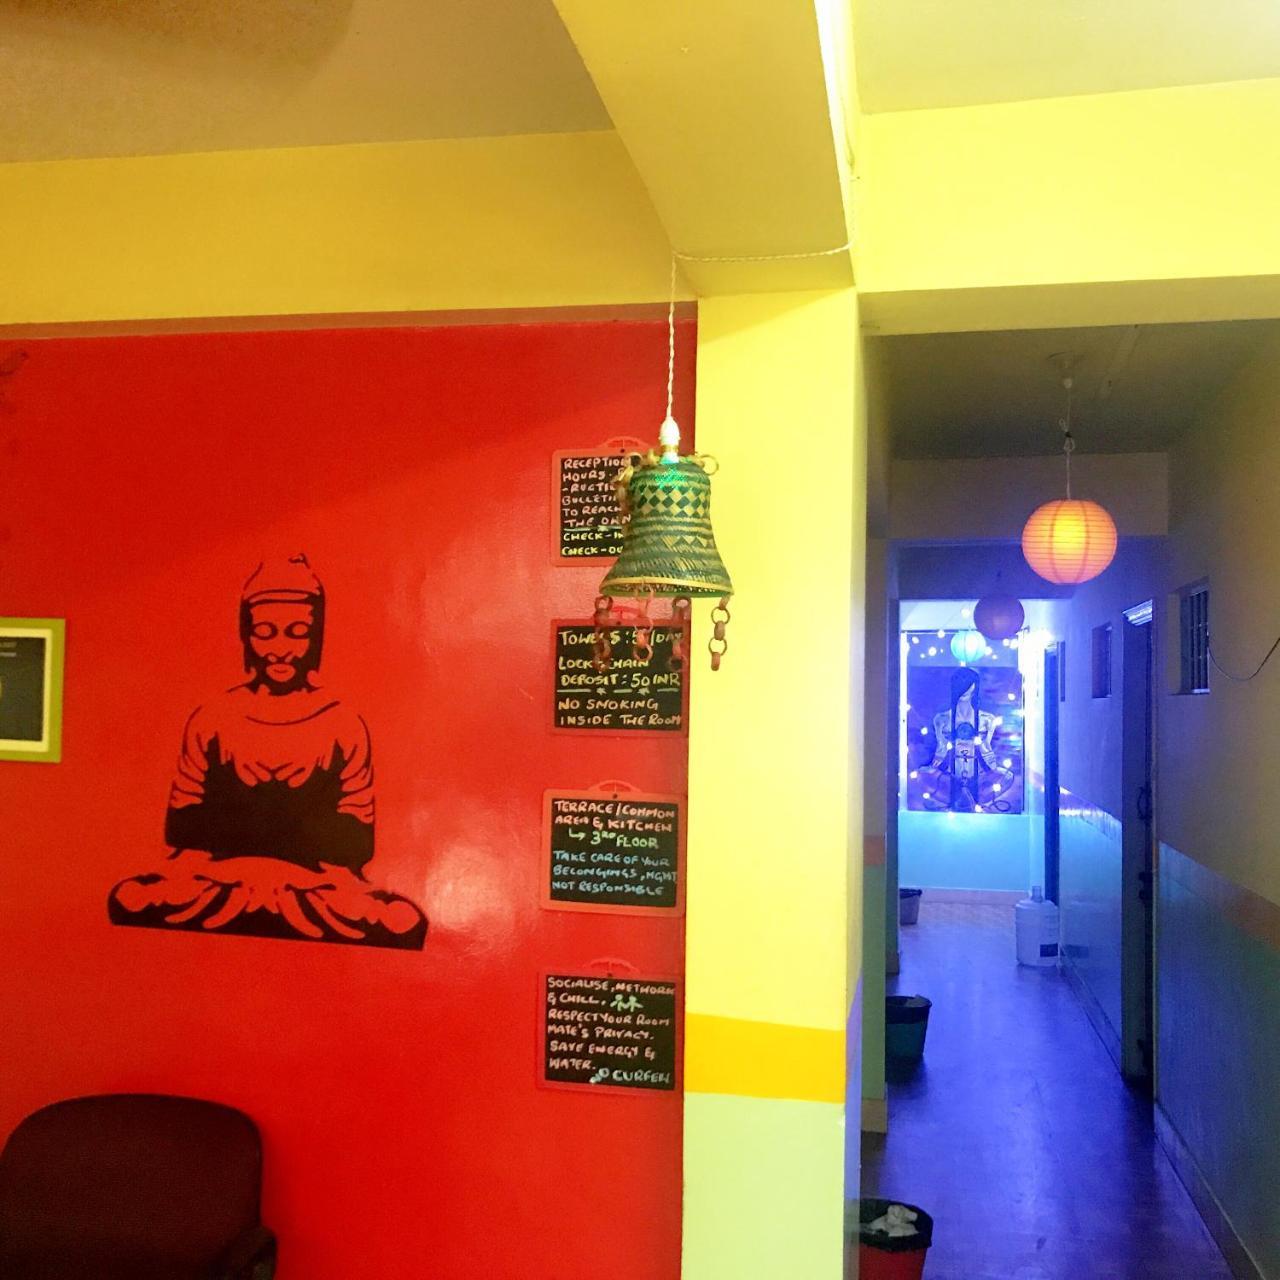 The Little Blue Window Hostel Bengaluru Kültér fotó